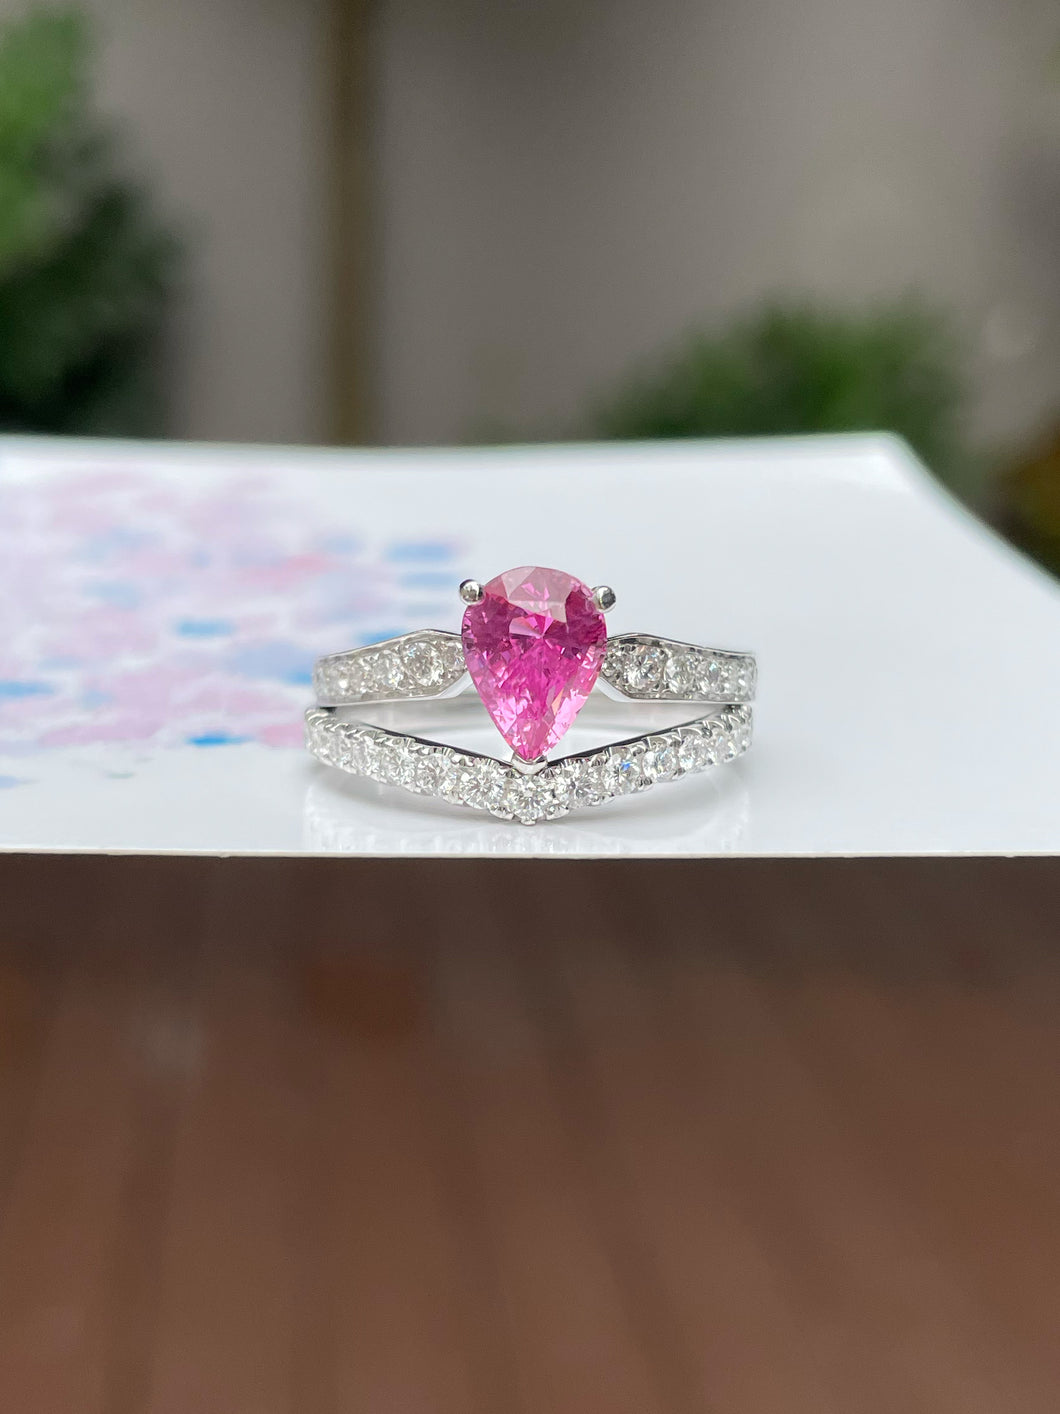 Unheated Pink Sapphire Ring - 2.0CT (NJR174)